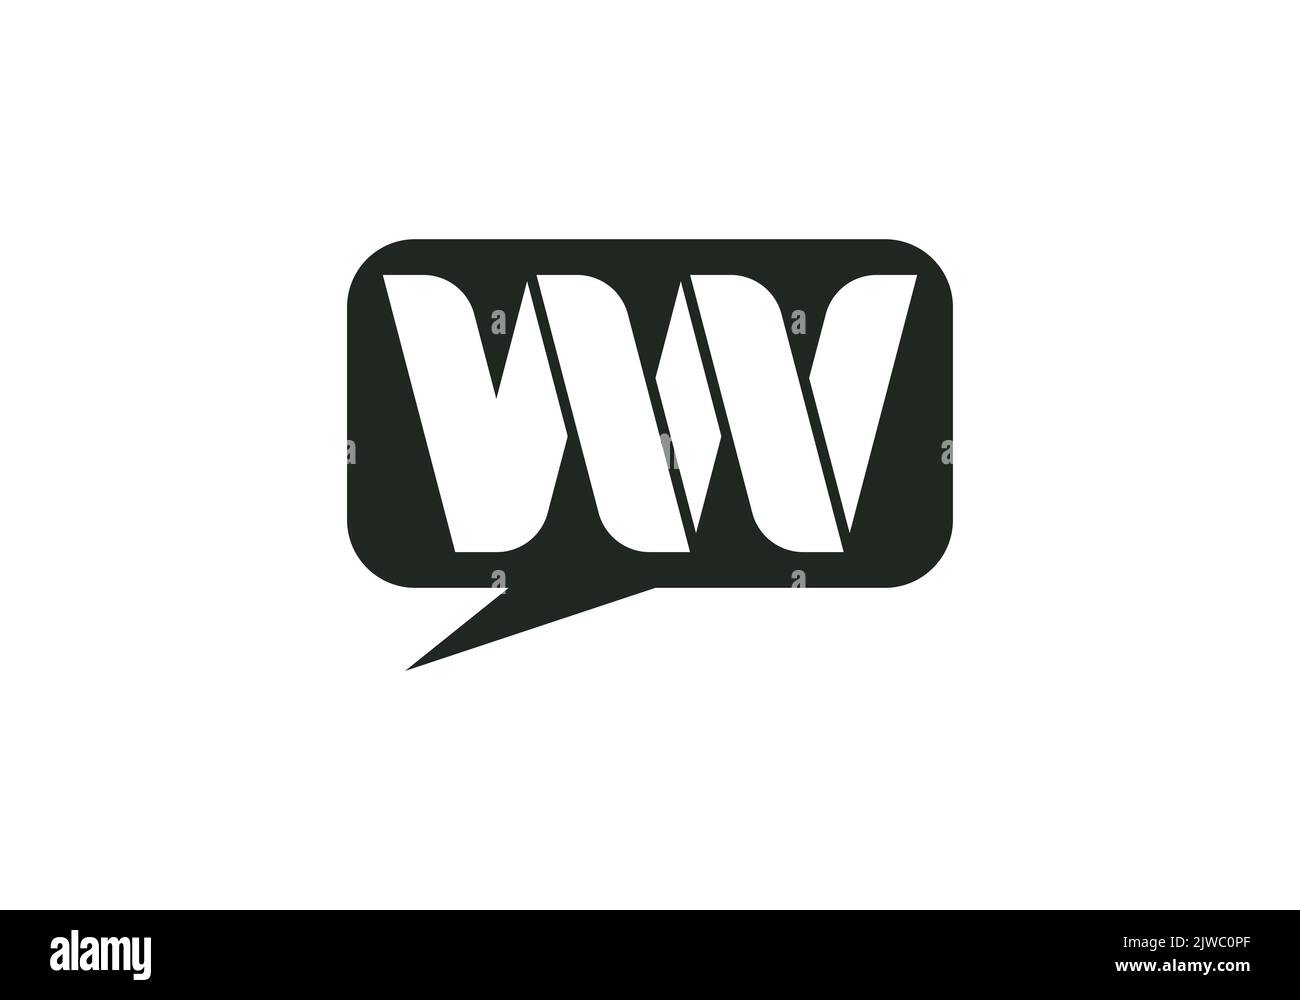 WW LW NW Initial Monogram Letter ww lw Logo Design Vector Template nw Letter Logo Design Stock Vector